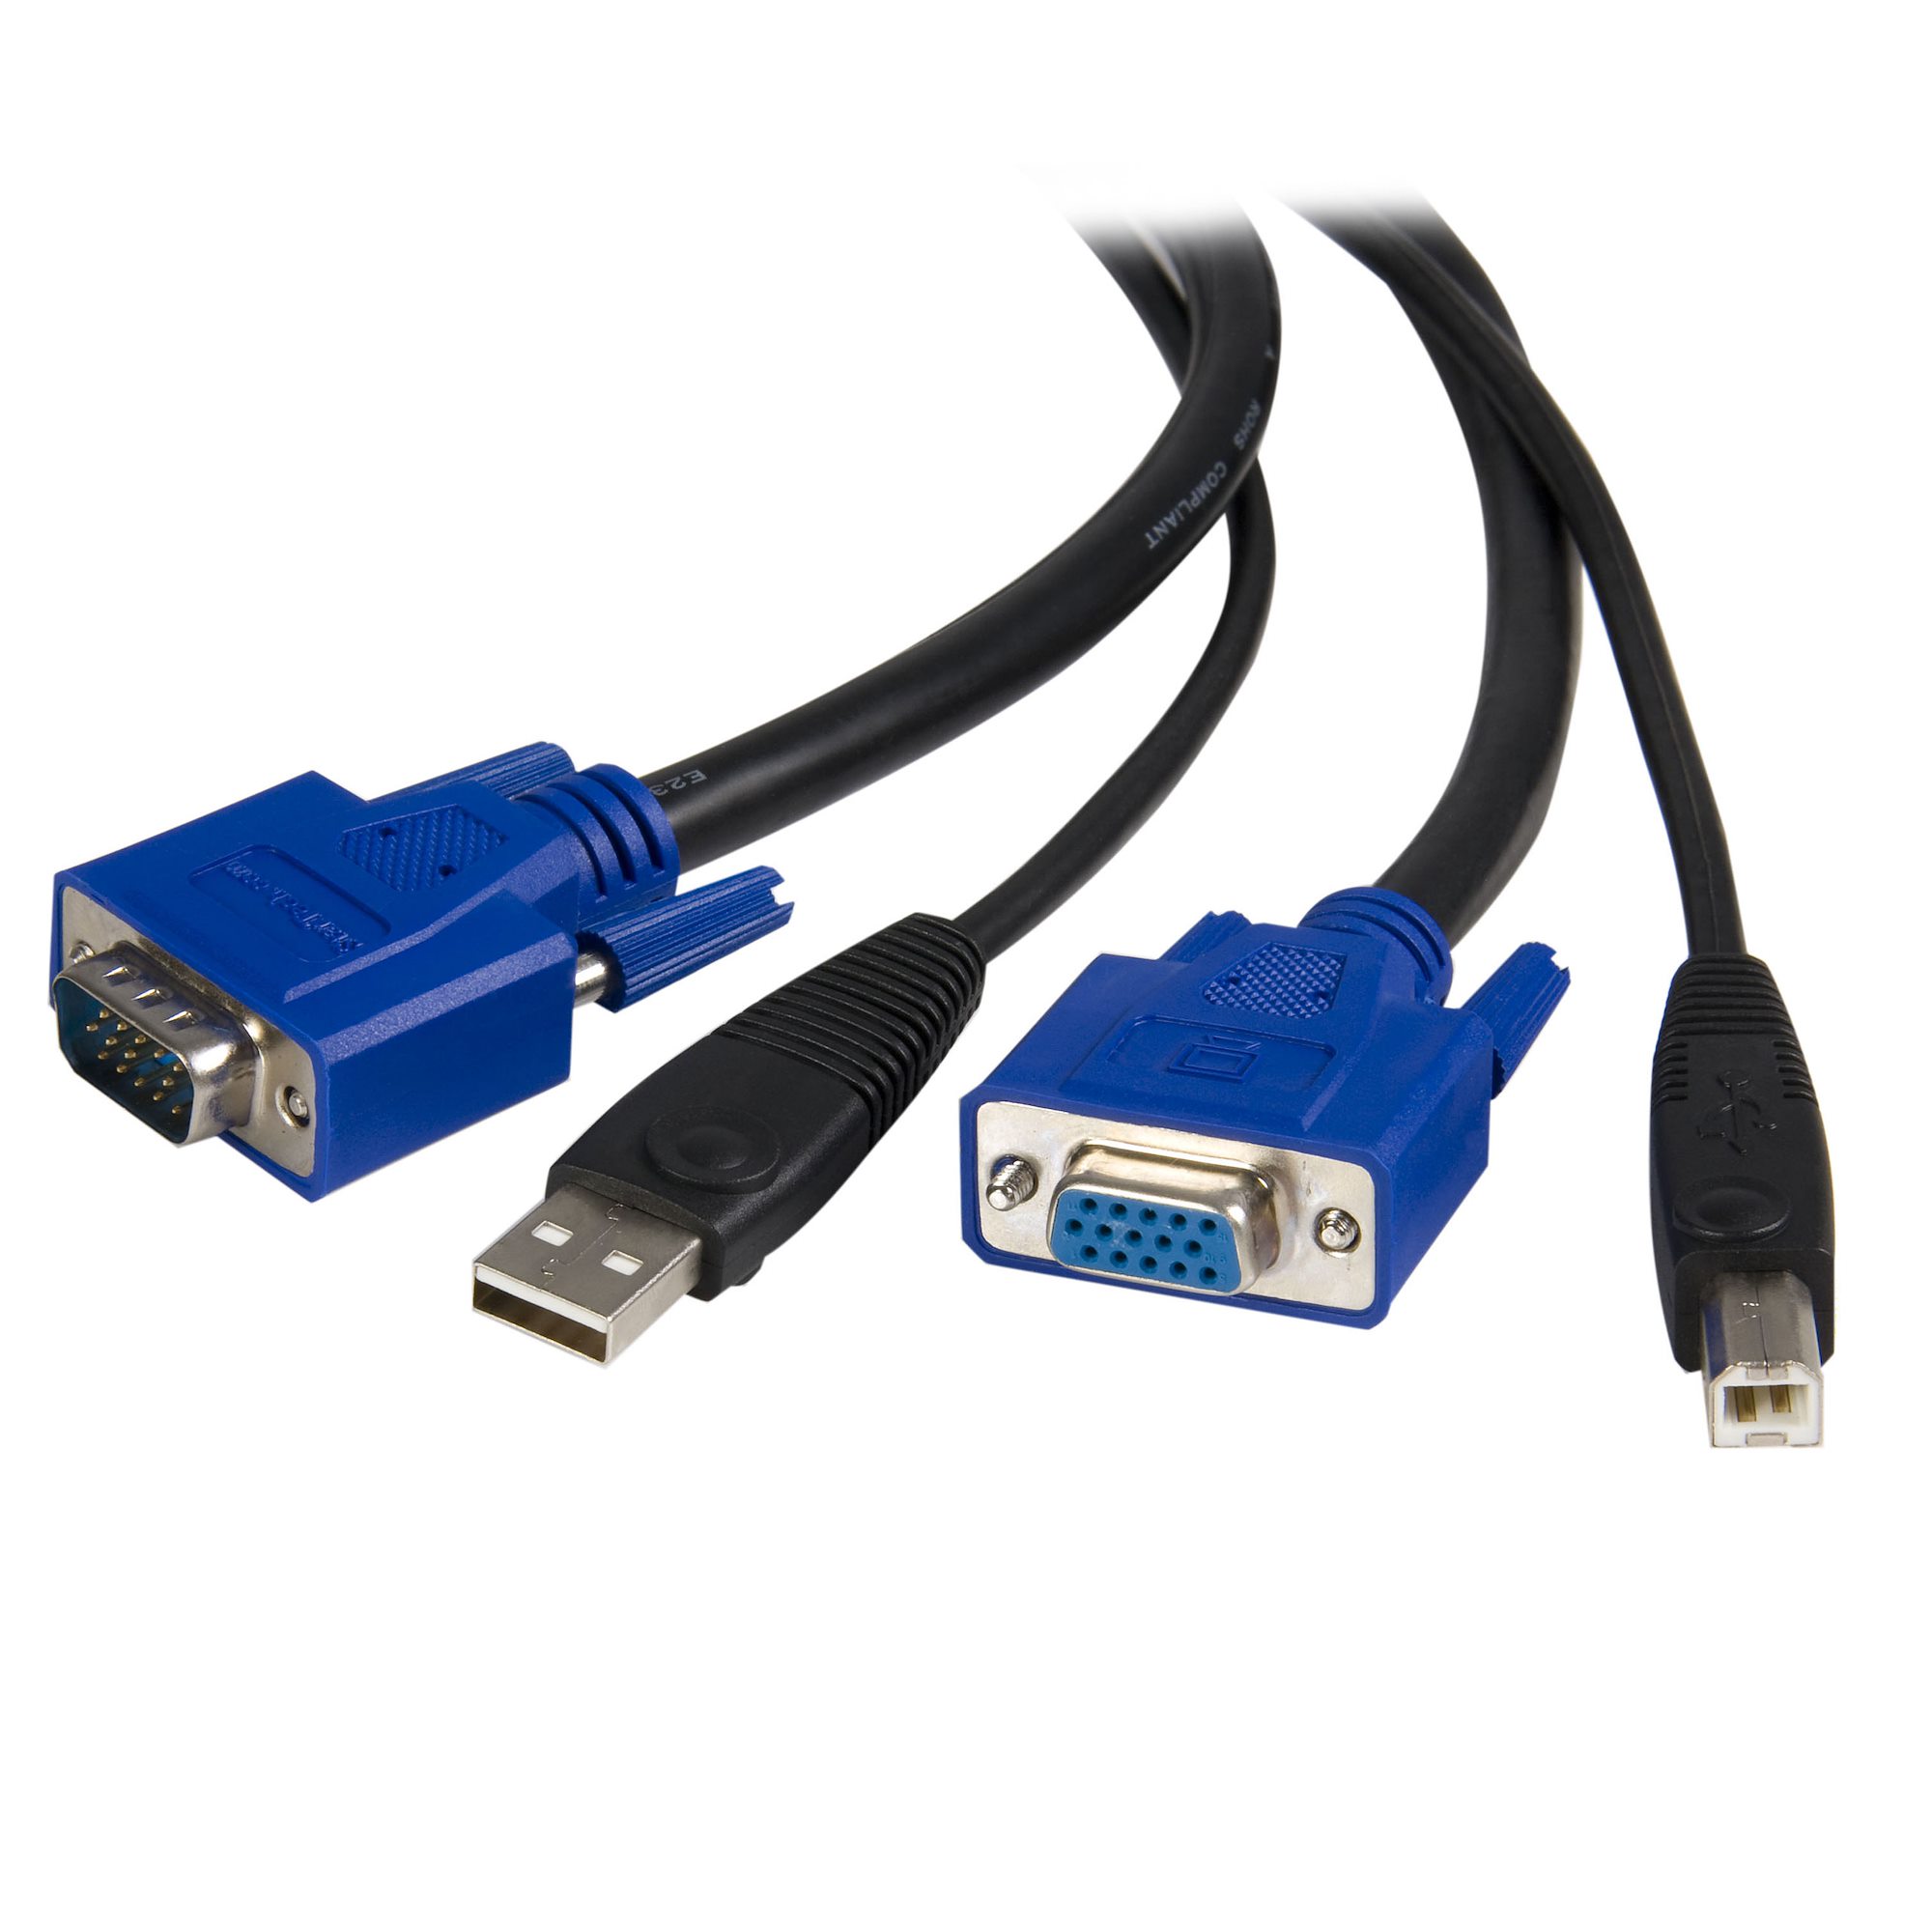 6 2-in-1 USB KVM Cable - KVM Cables StarTech.com